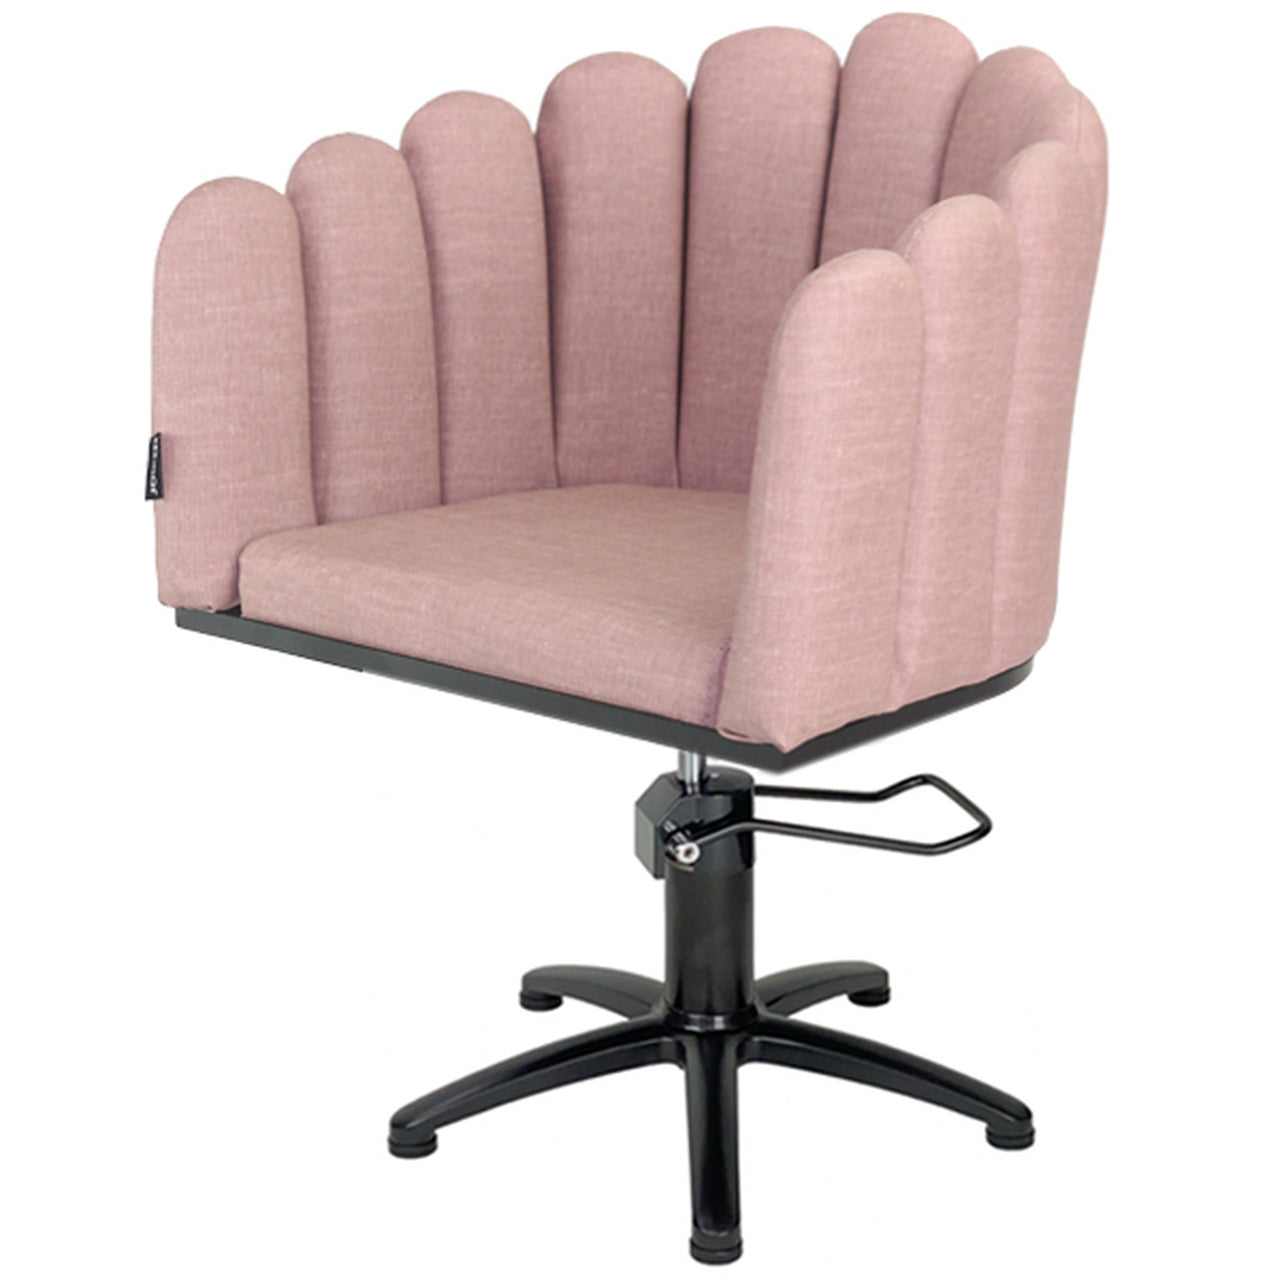 Penelope Dusty Pink Chair - BLACK 5 Star Hydraulic